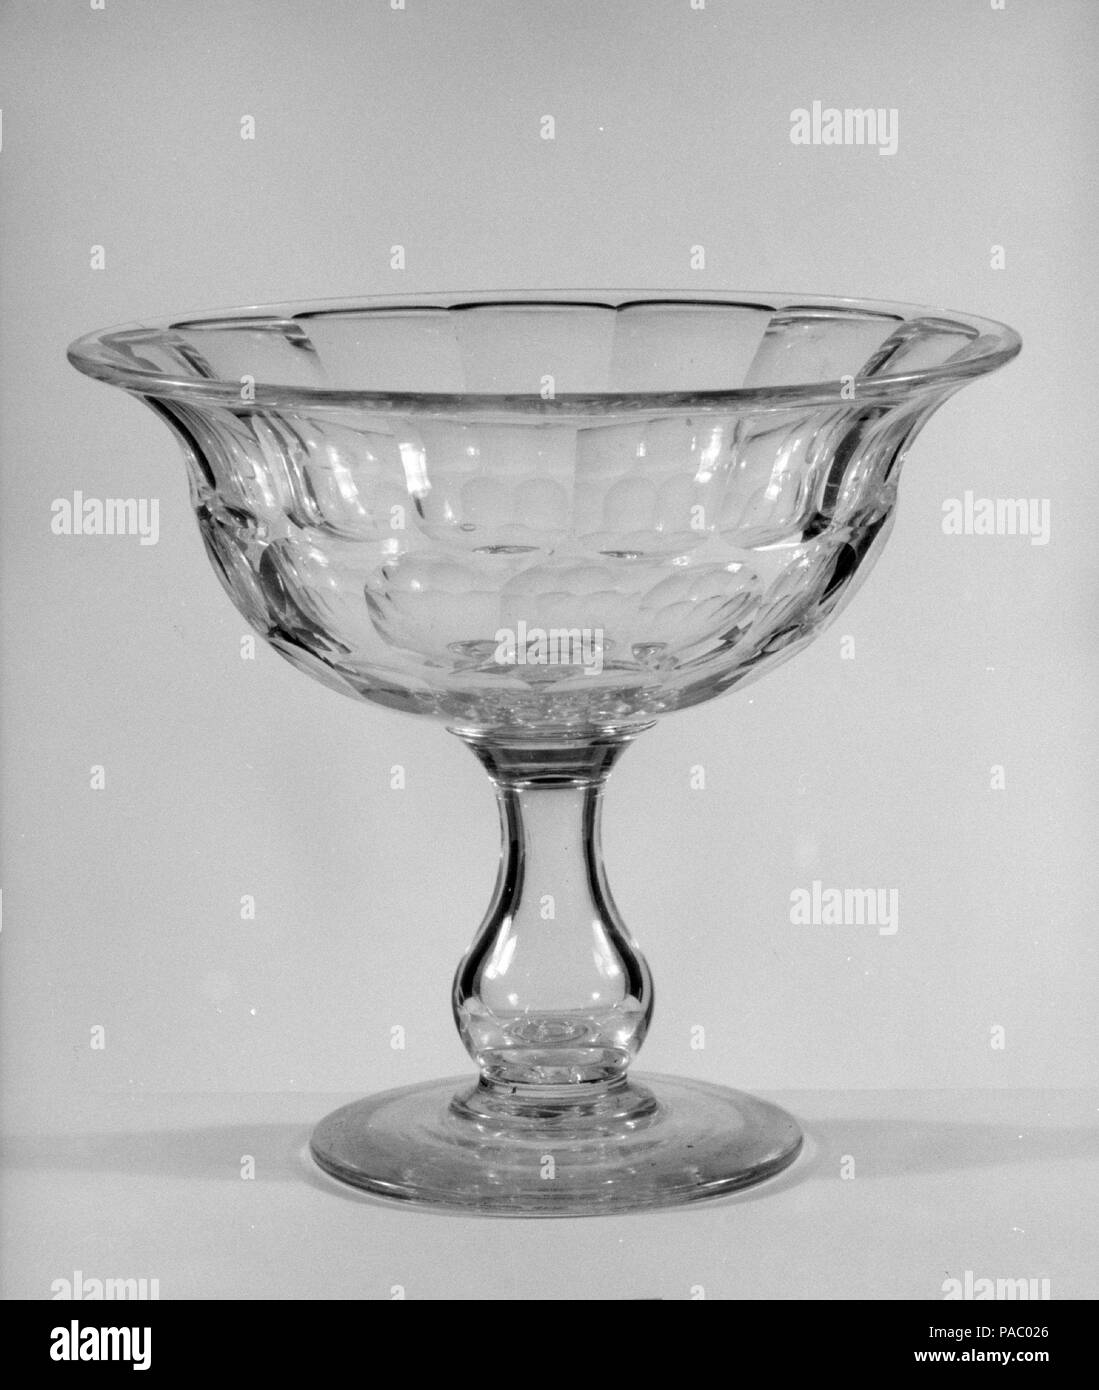 Compote. Culture: American. Dimensions: H. 8 3/4 in. (22.2 cm); Diam. 9 5/16 in. (23.7 cm). Date: ca. 1840. Museum: Metropolitan Museum of Art, New York, USA. Stock Photo